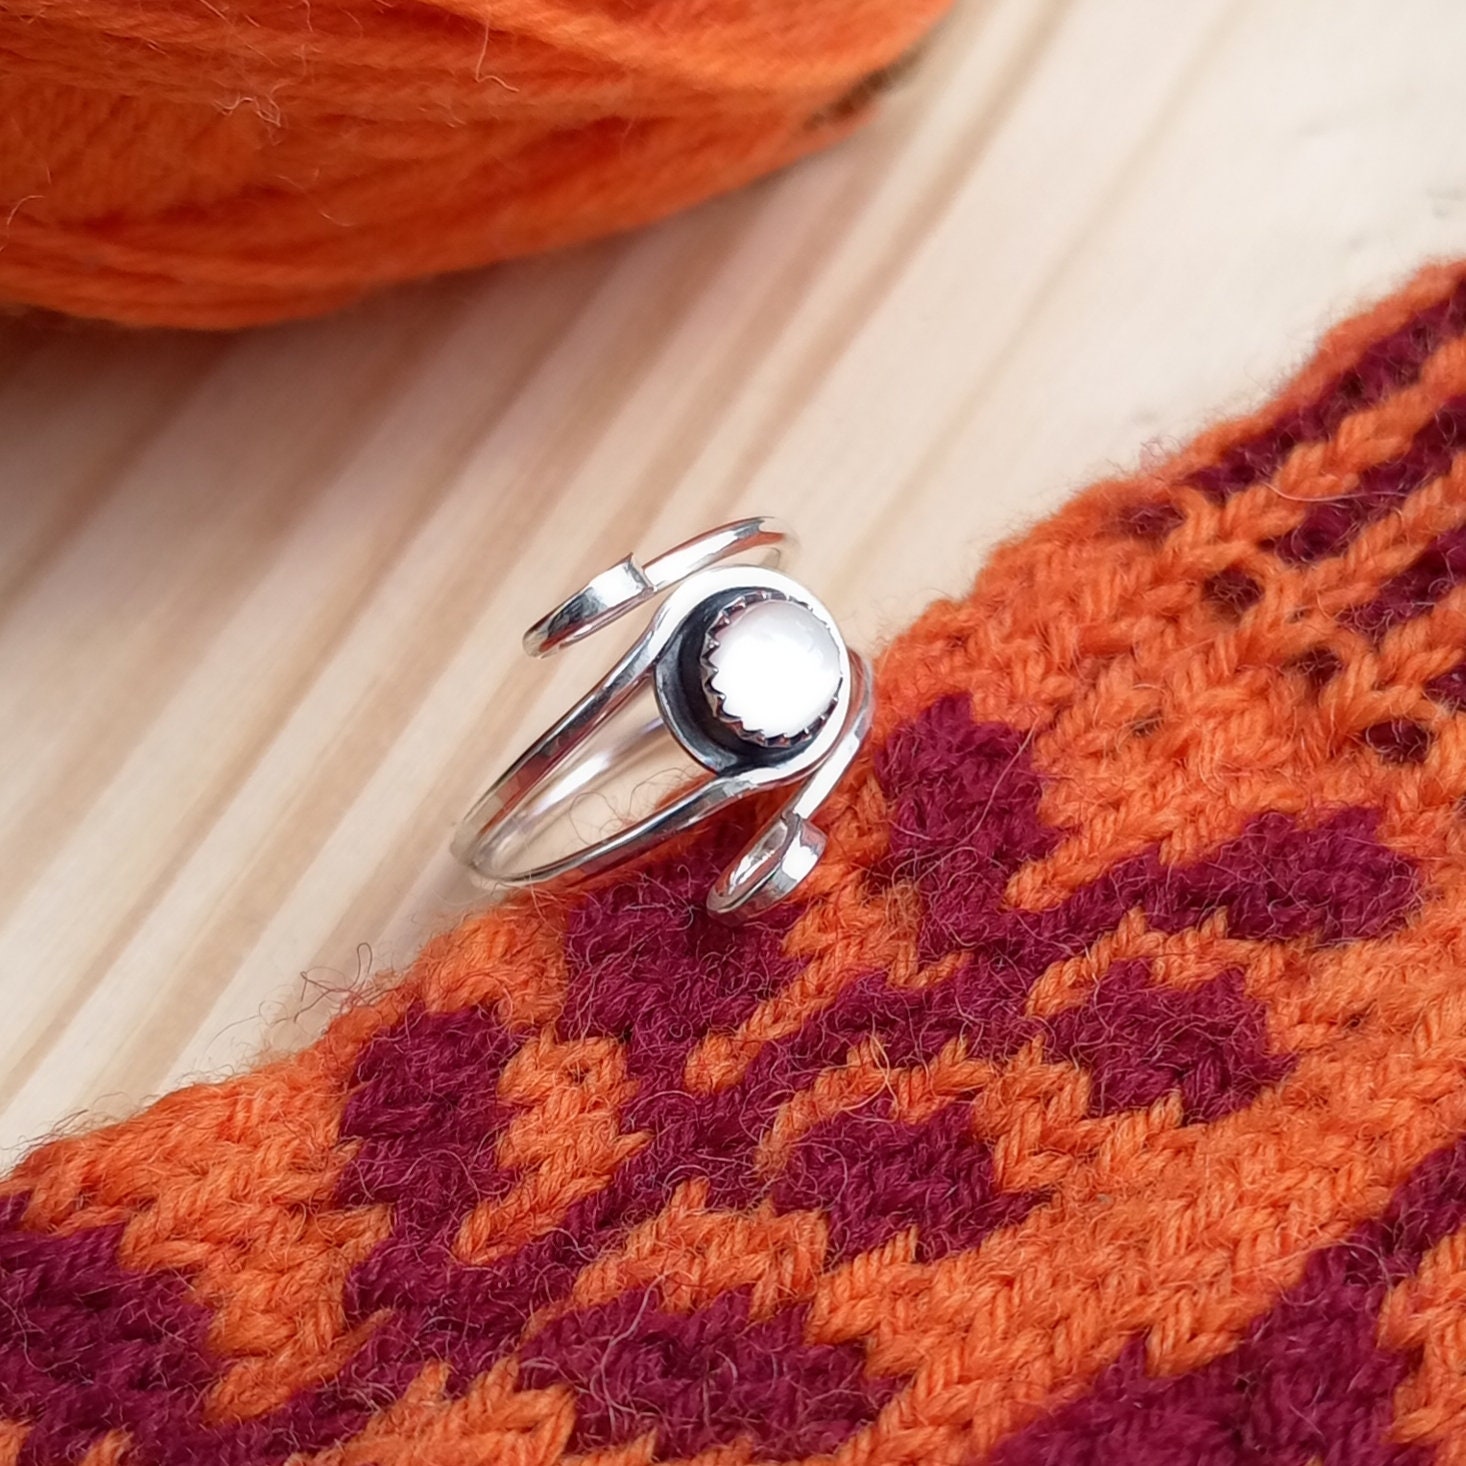 Cosmos Yarn Guide Ring Crochet / Knitting Tension Ring 935